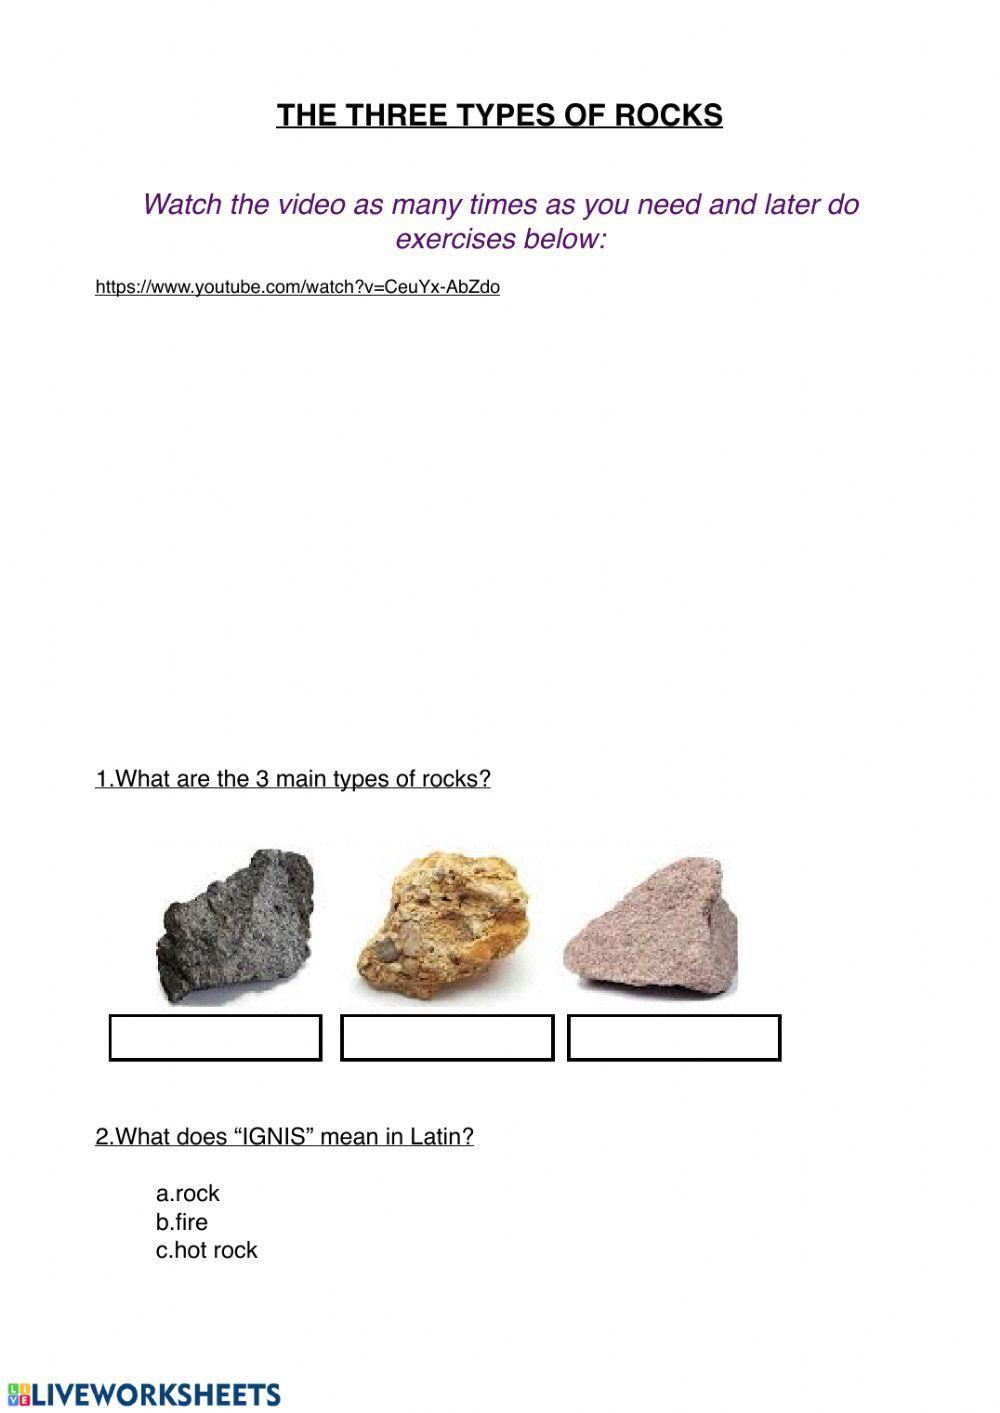 Three types of rocks